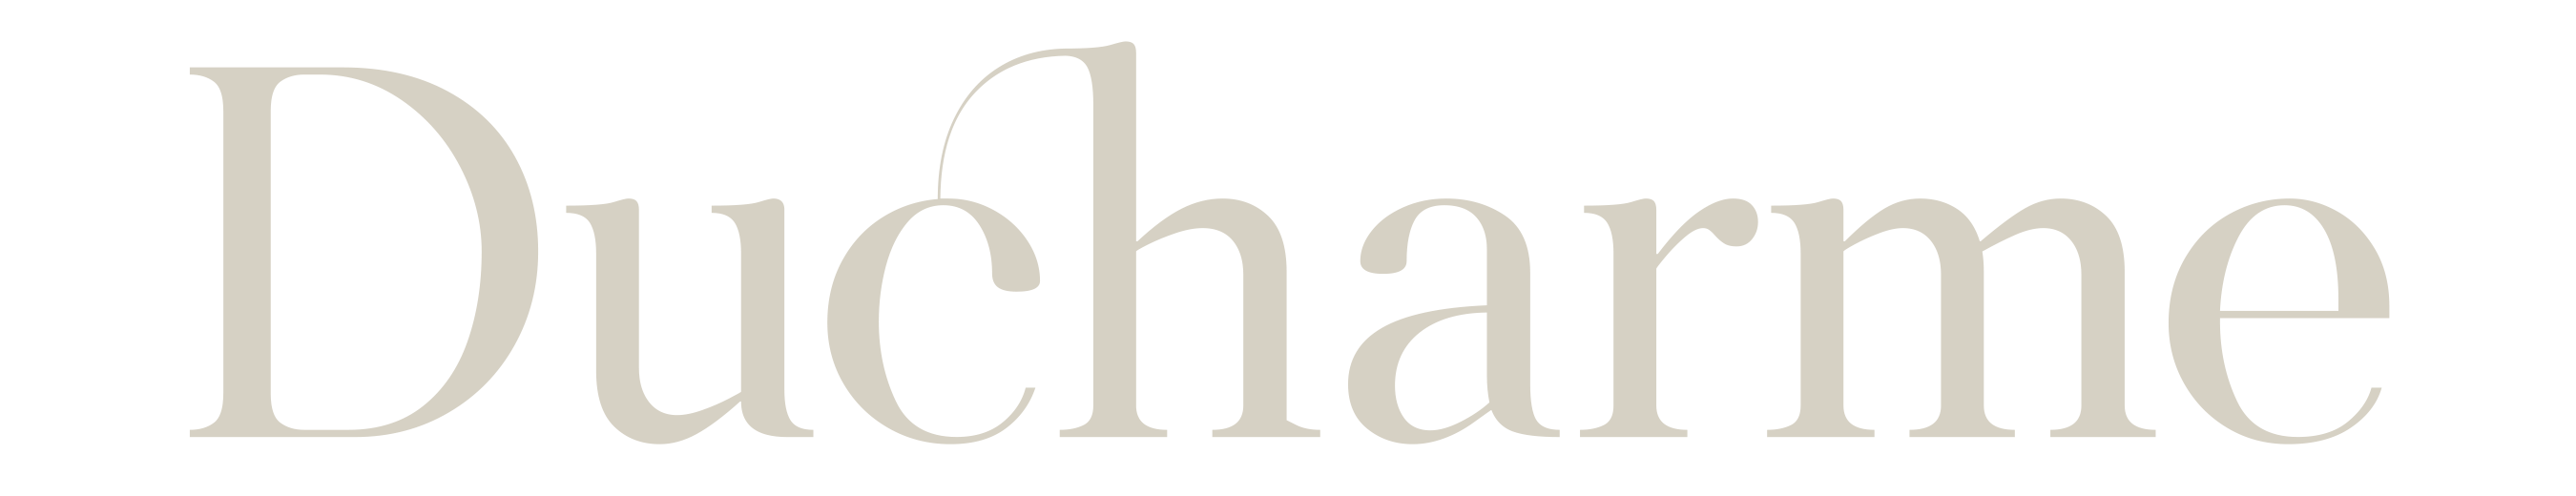 Ducharme Communication Logo